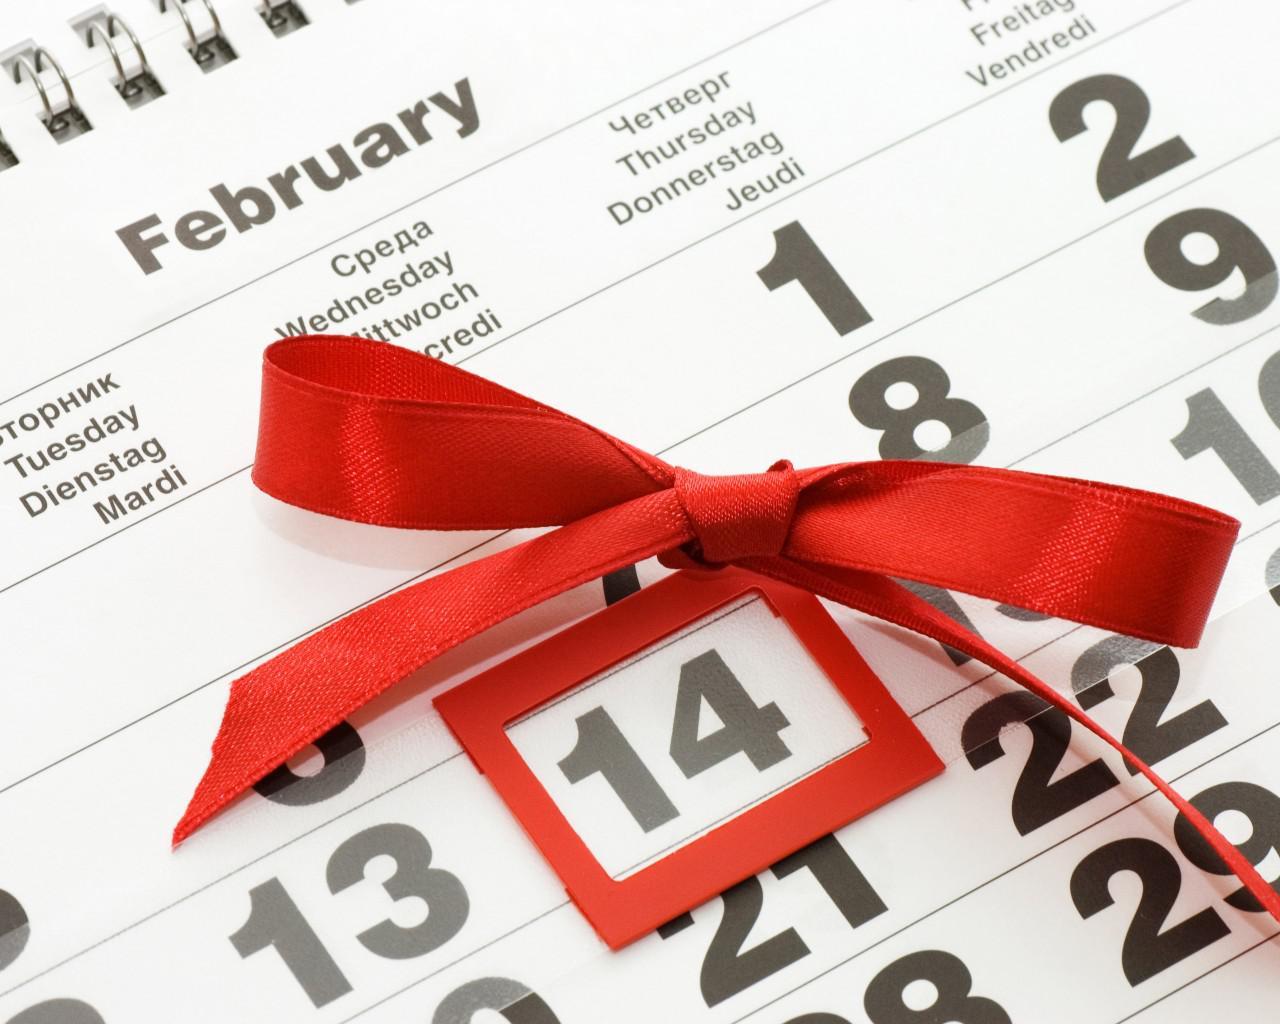 February 14 Valentine's Day